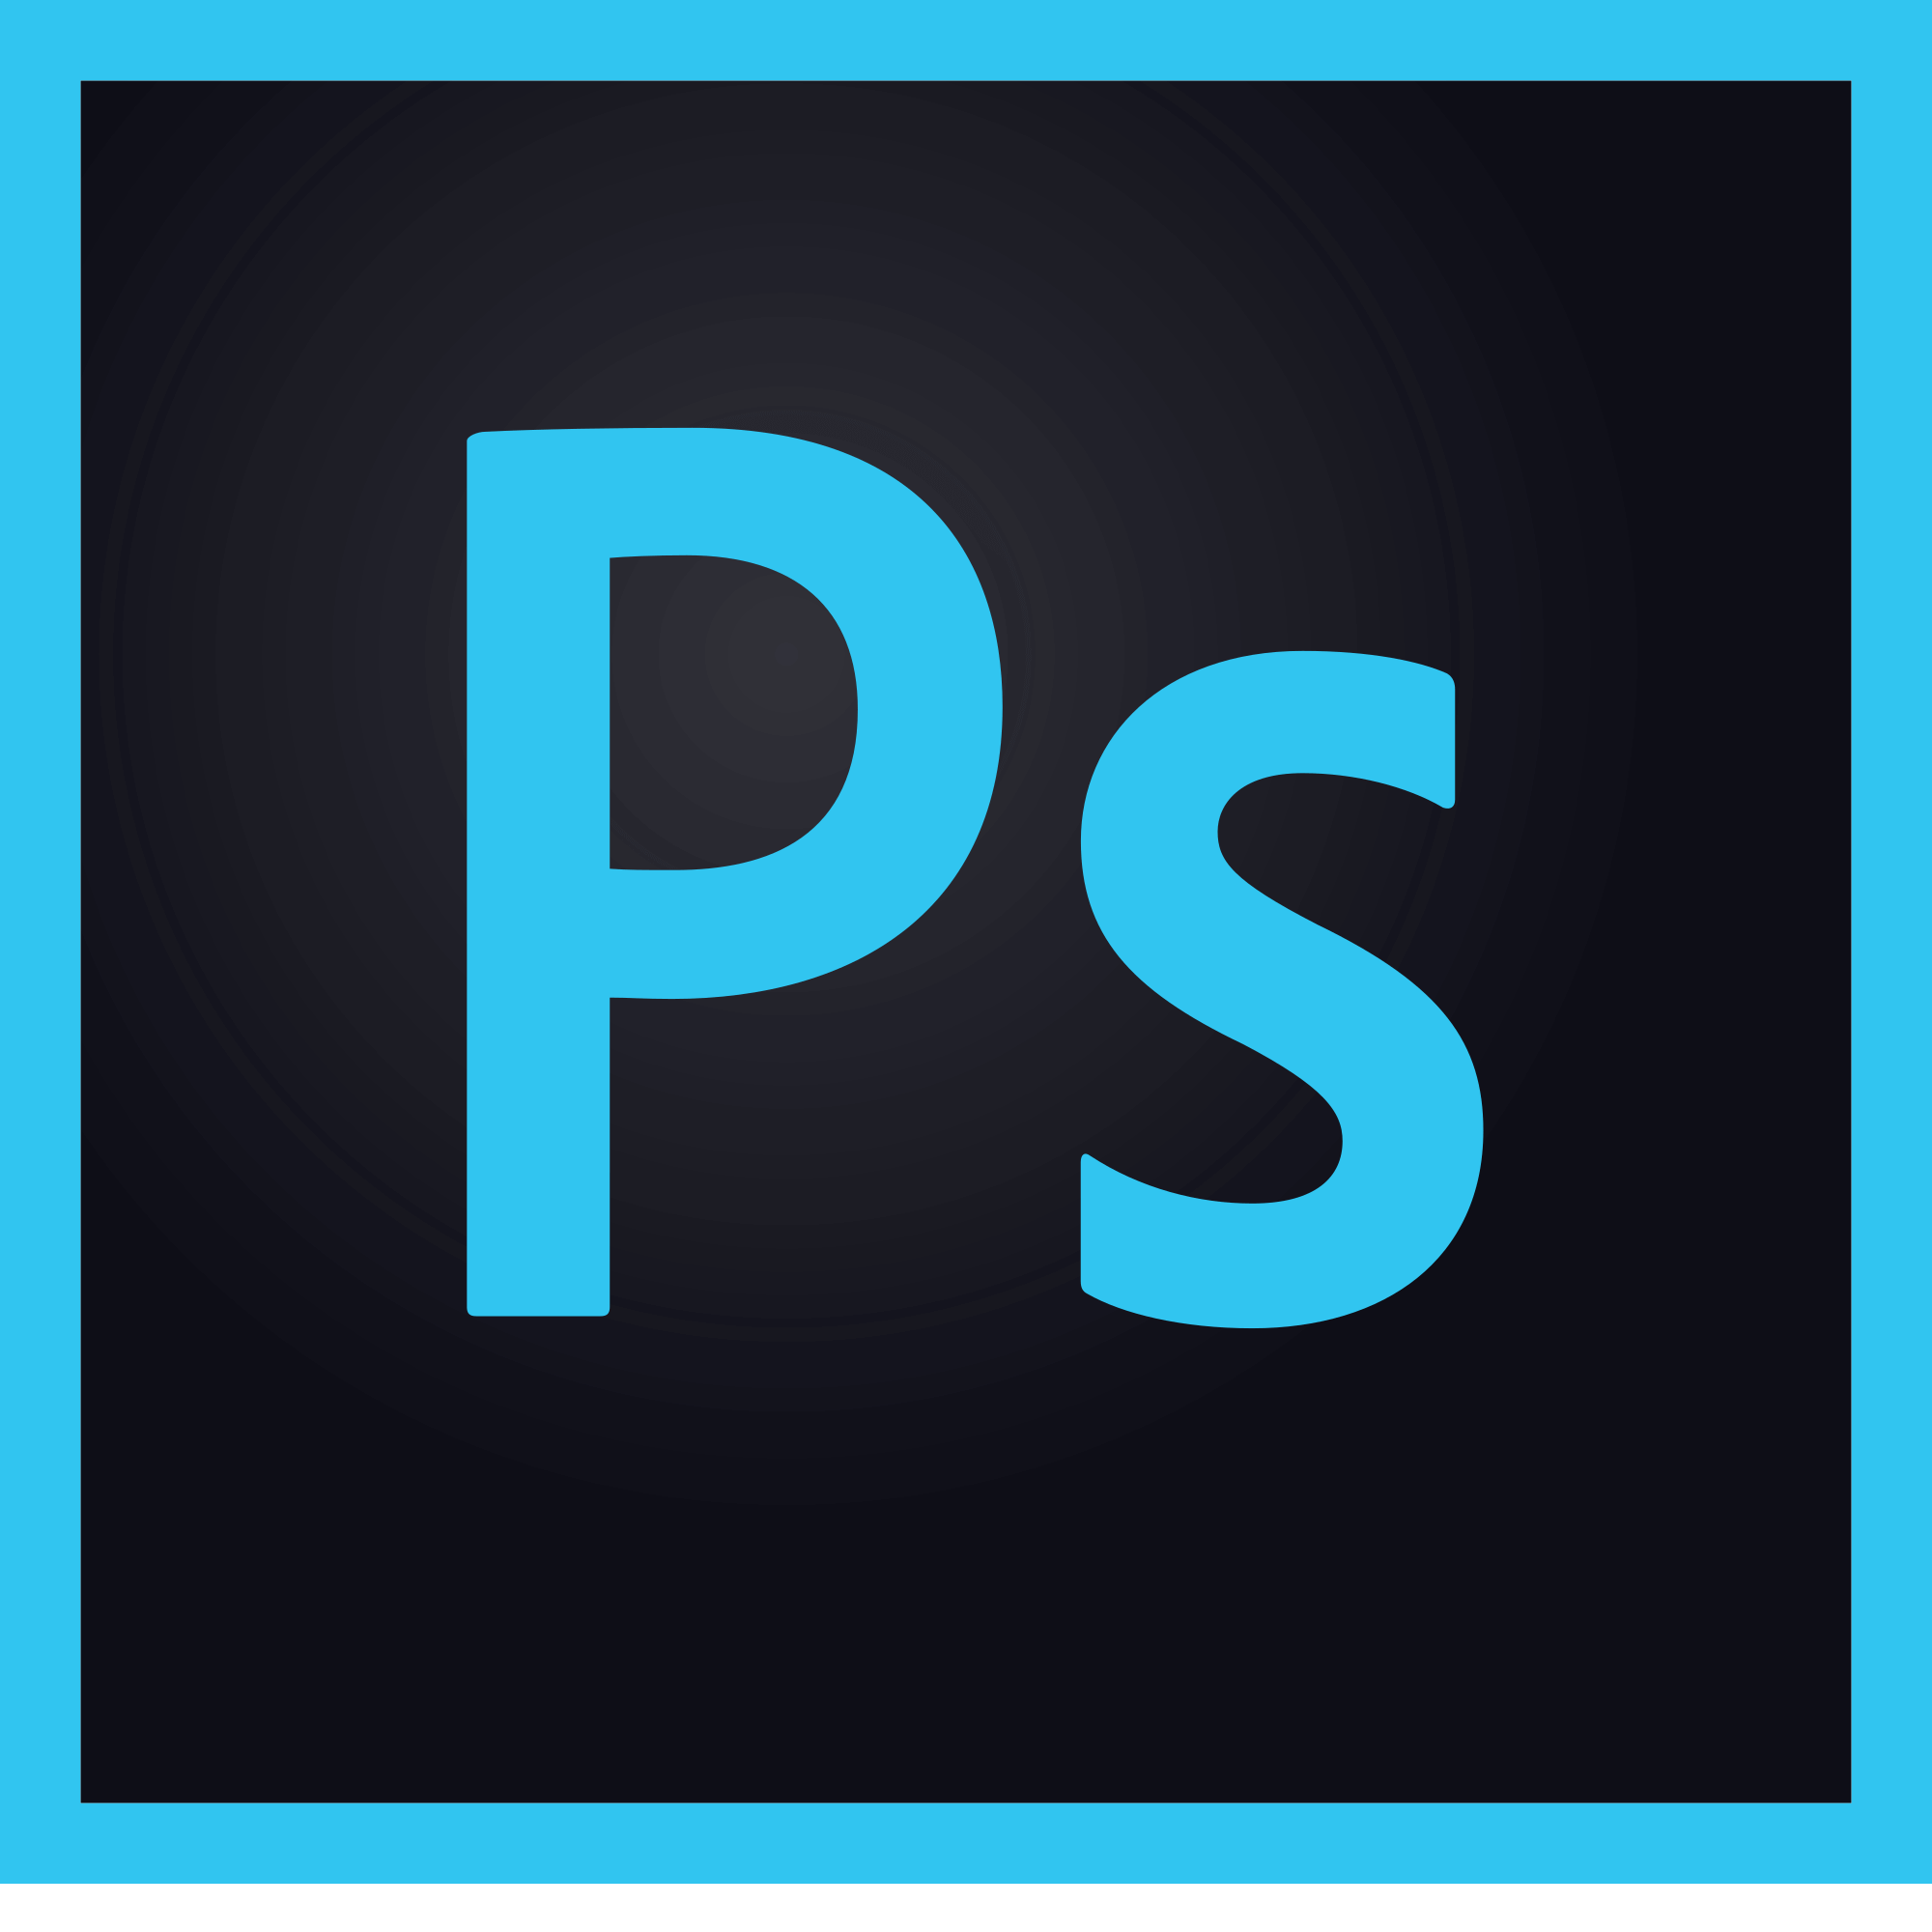 Adobe_Photoshop_CC_icon